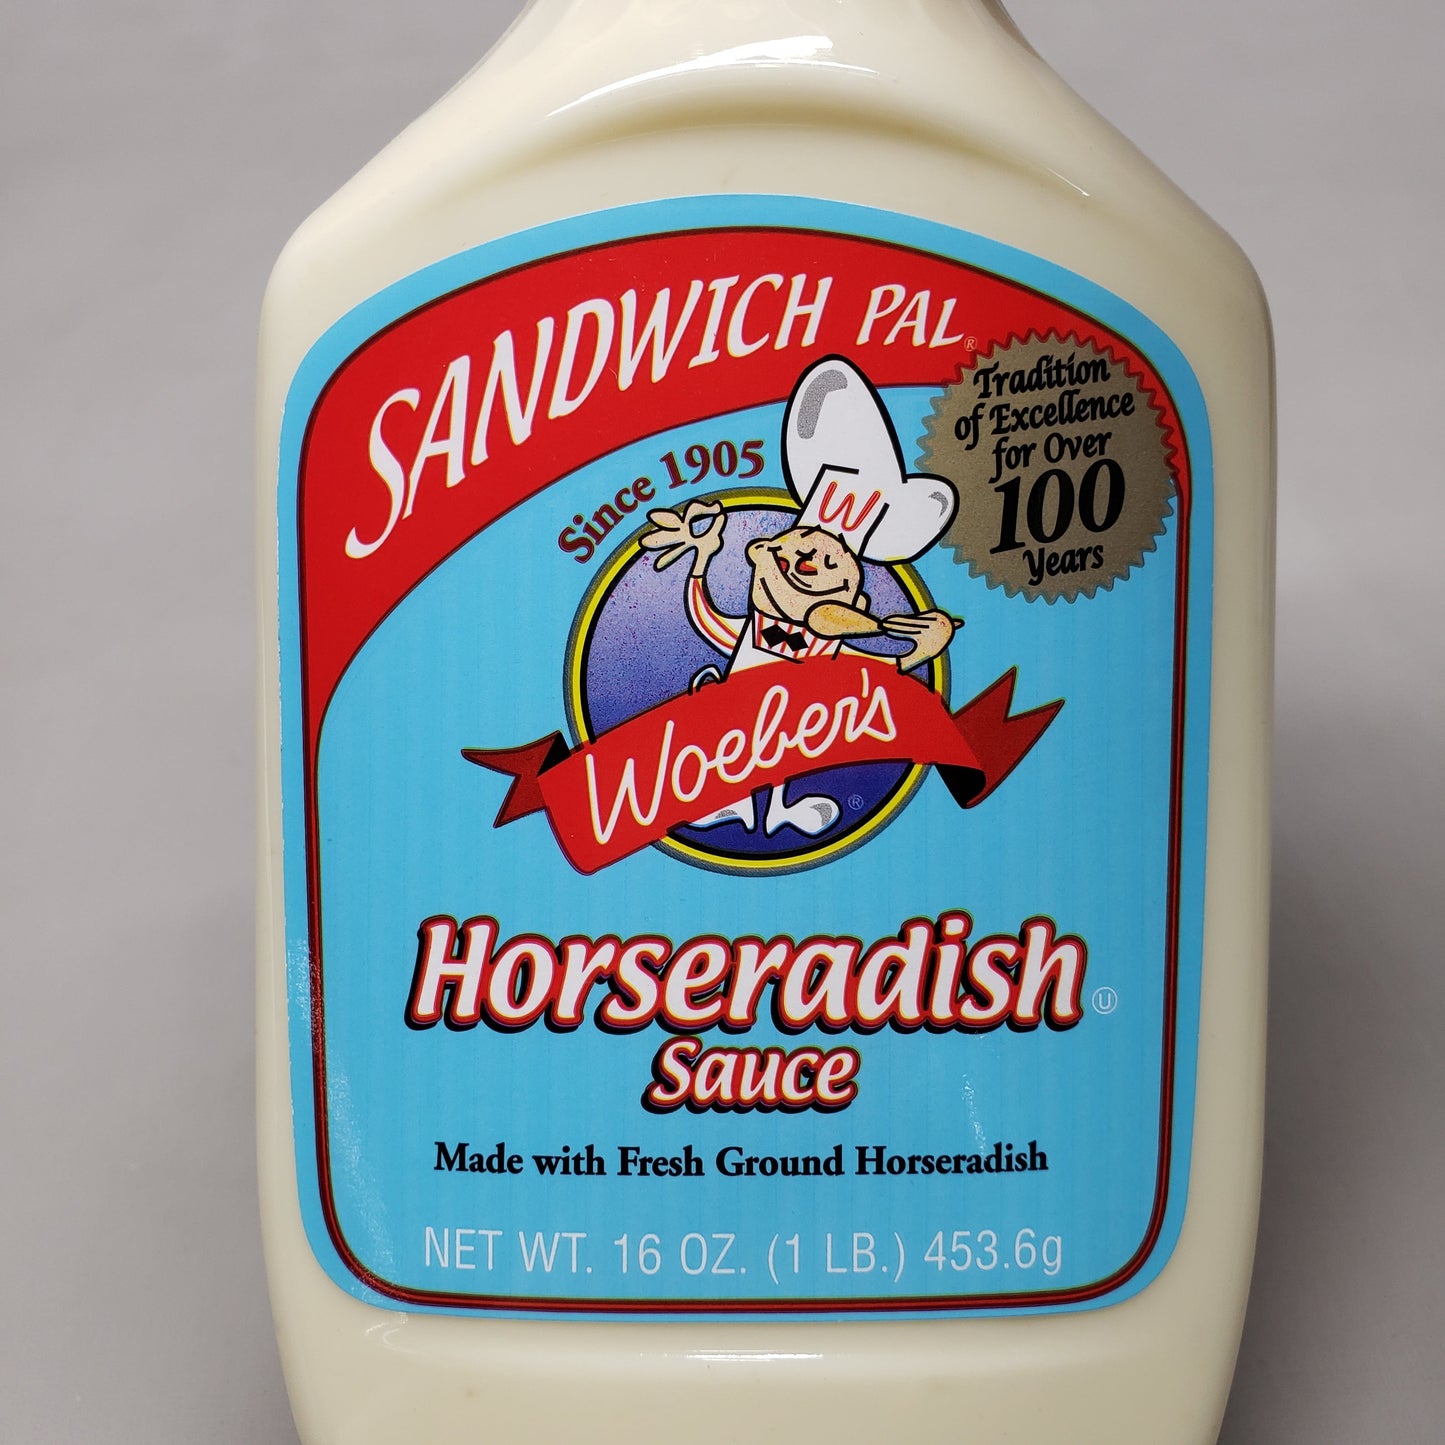 ZA@ WOEBER'S (24 PACK) Sandwich Pal Horseradish Sauce 6/16 oz 10/23 A